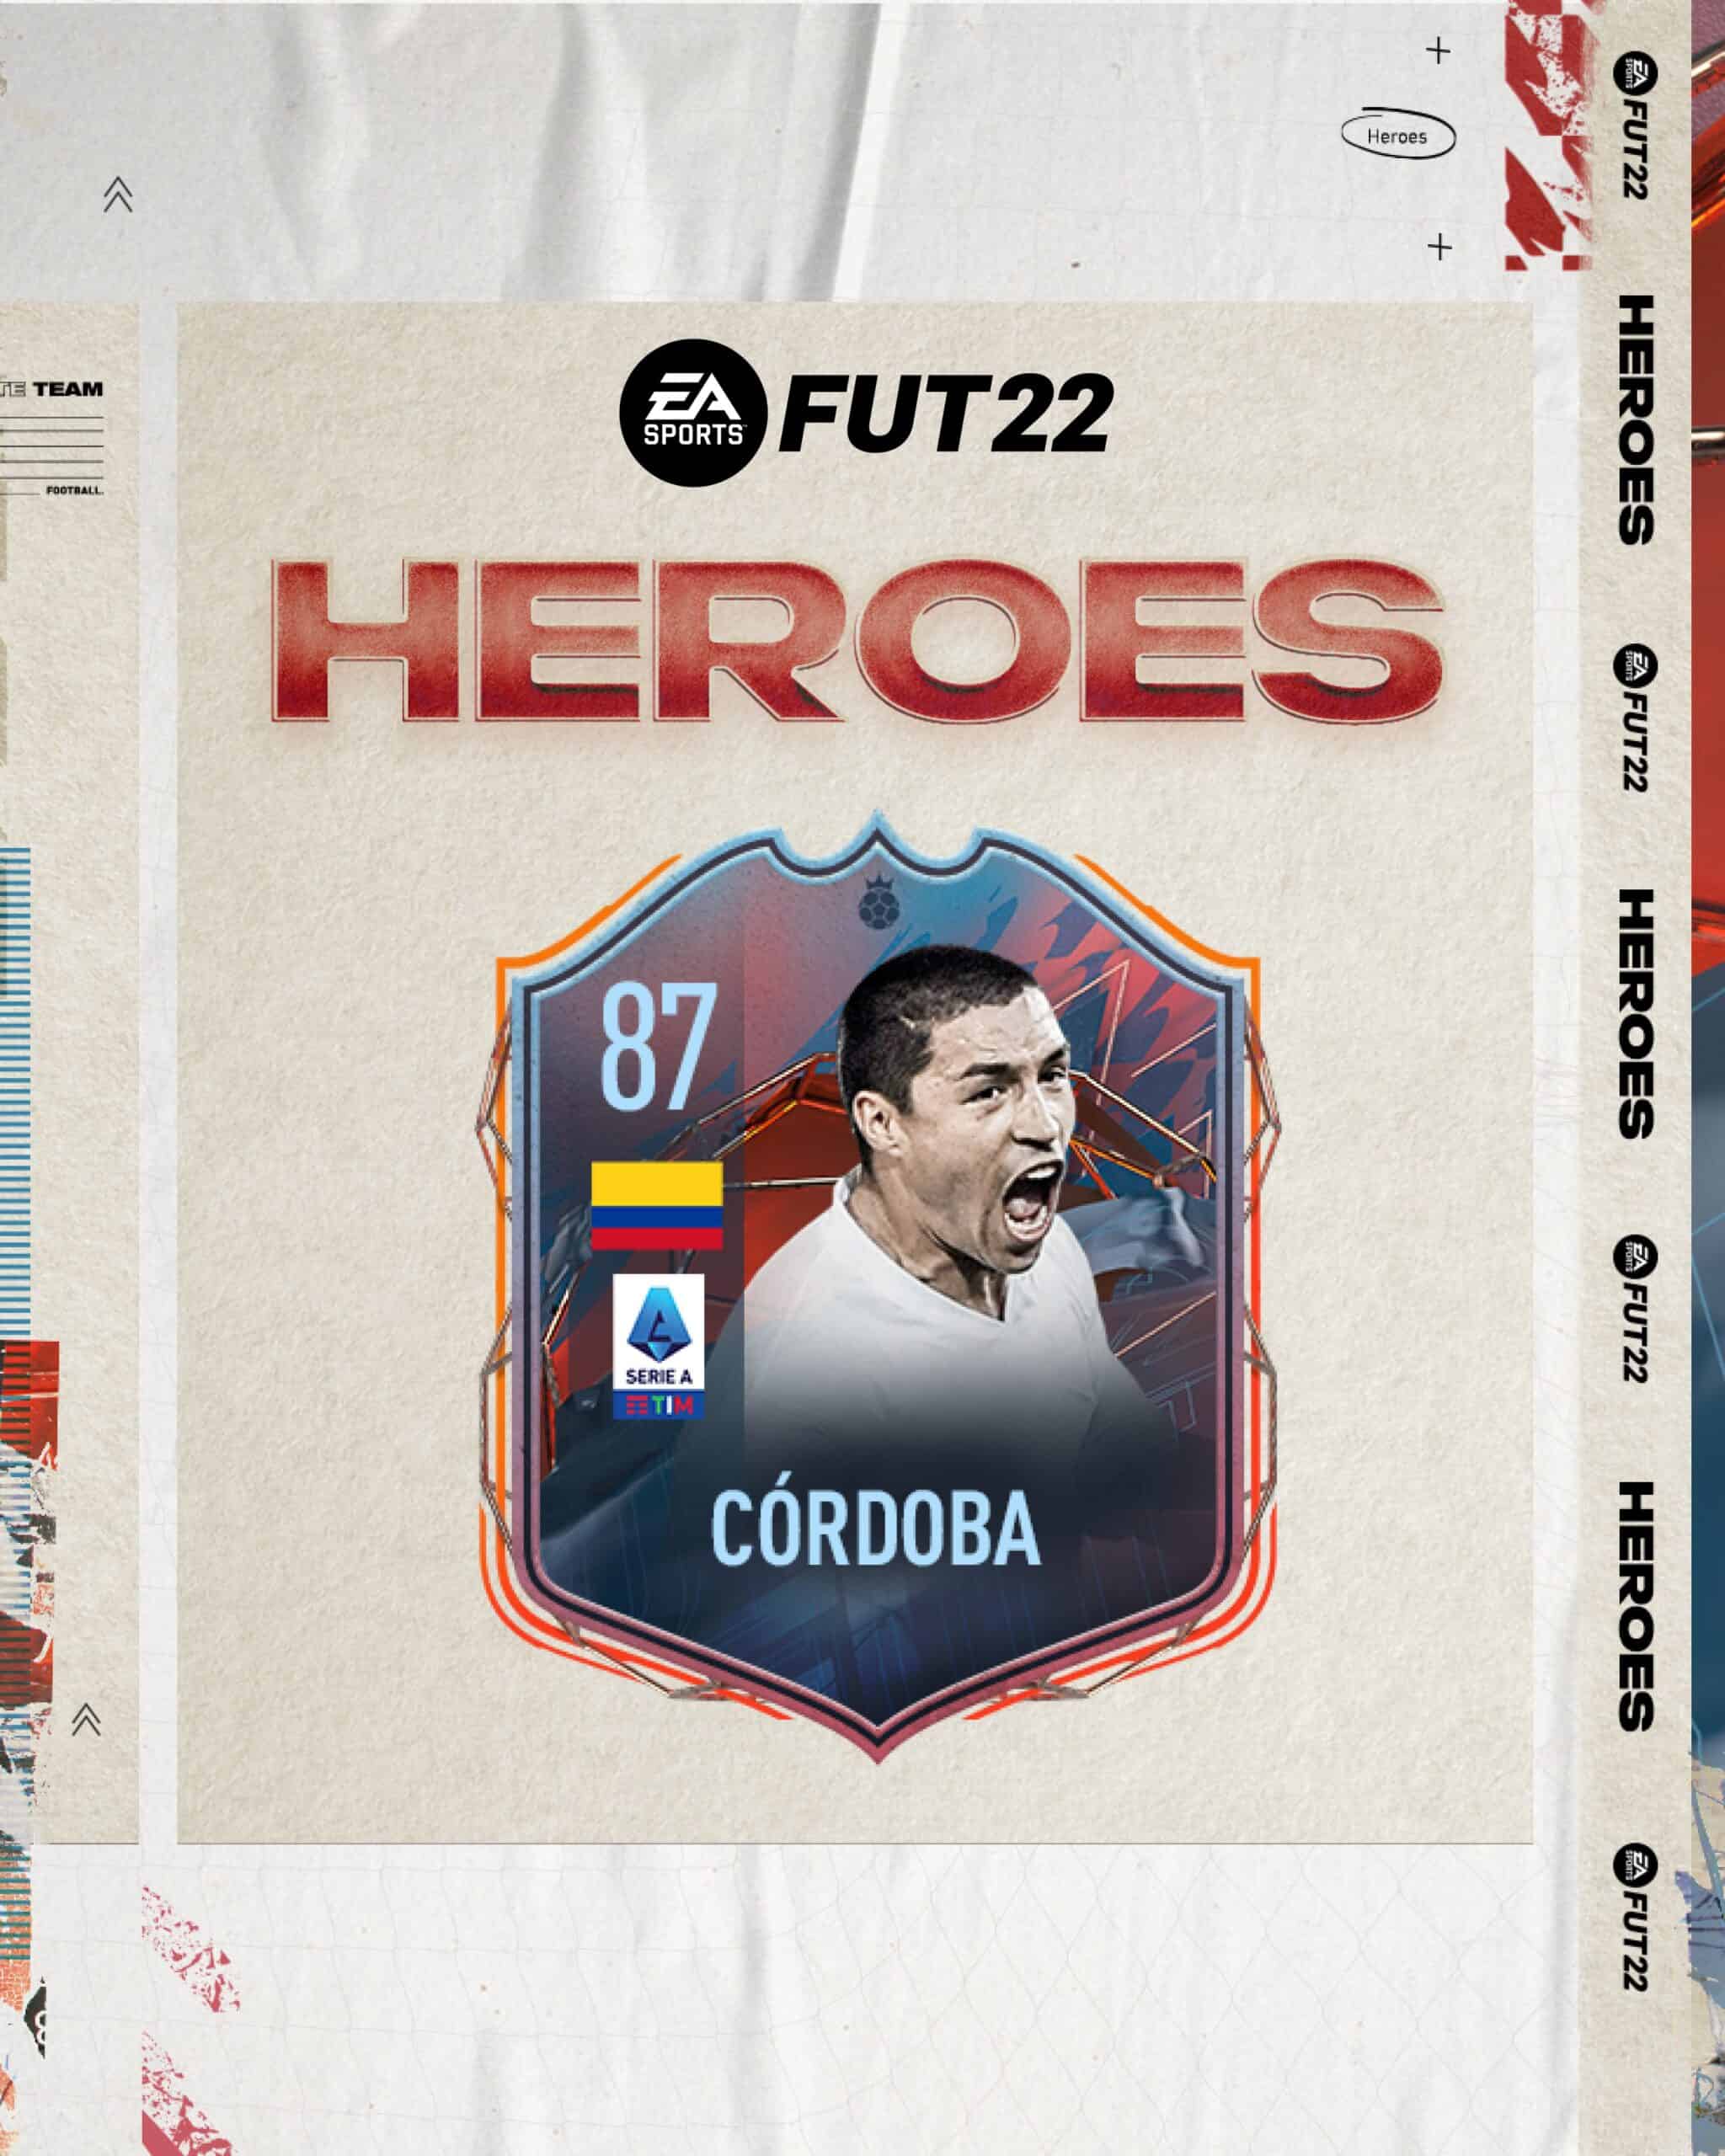 FIFA 22 Ivan Cordoba FUT Heroes card revealed